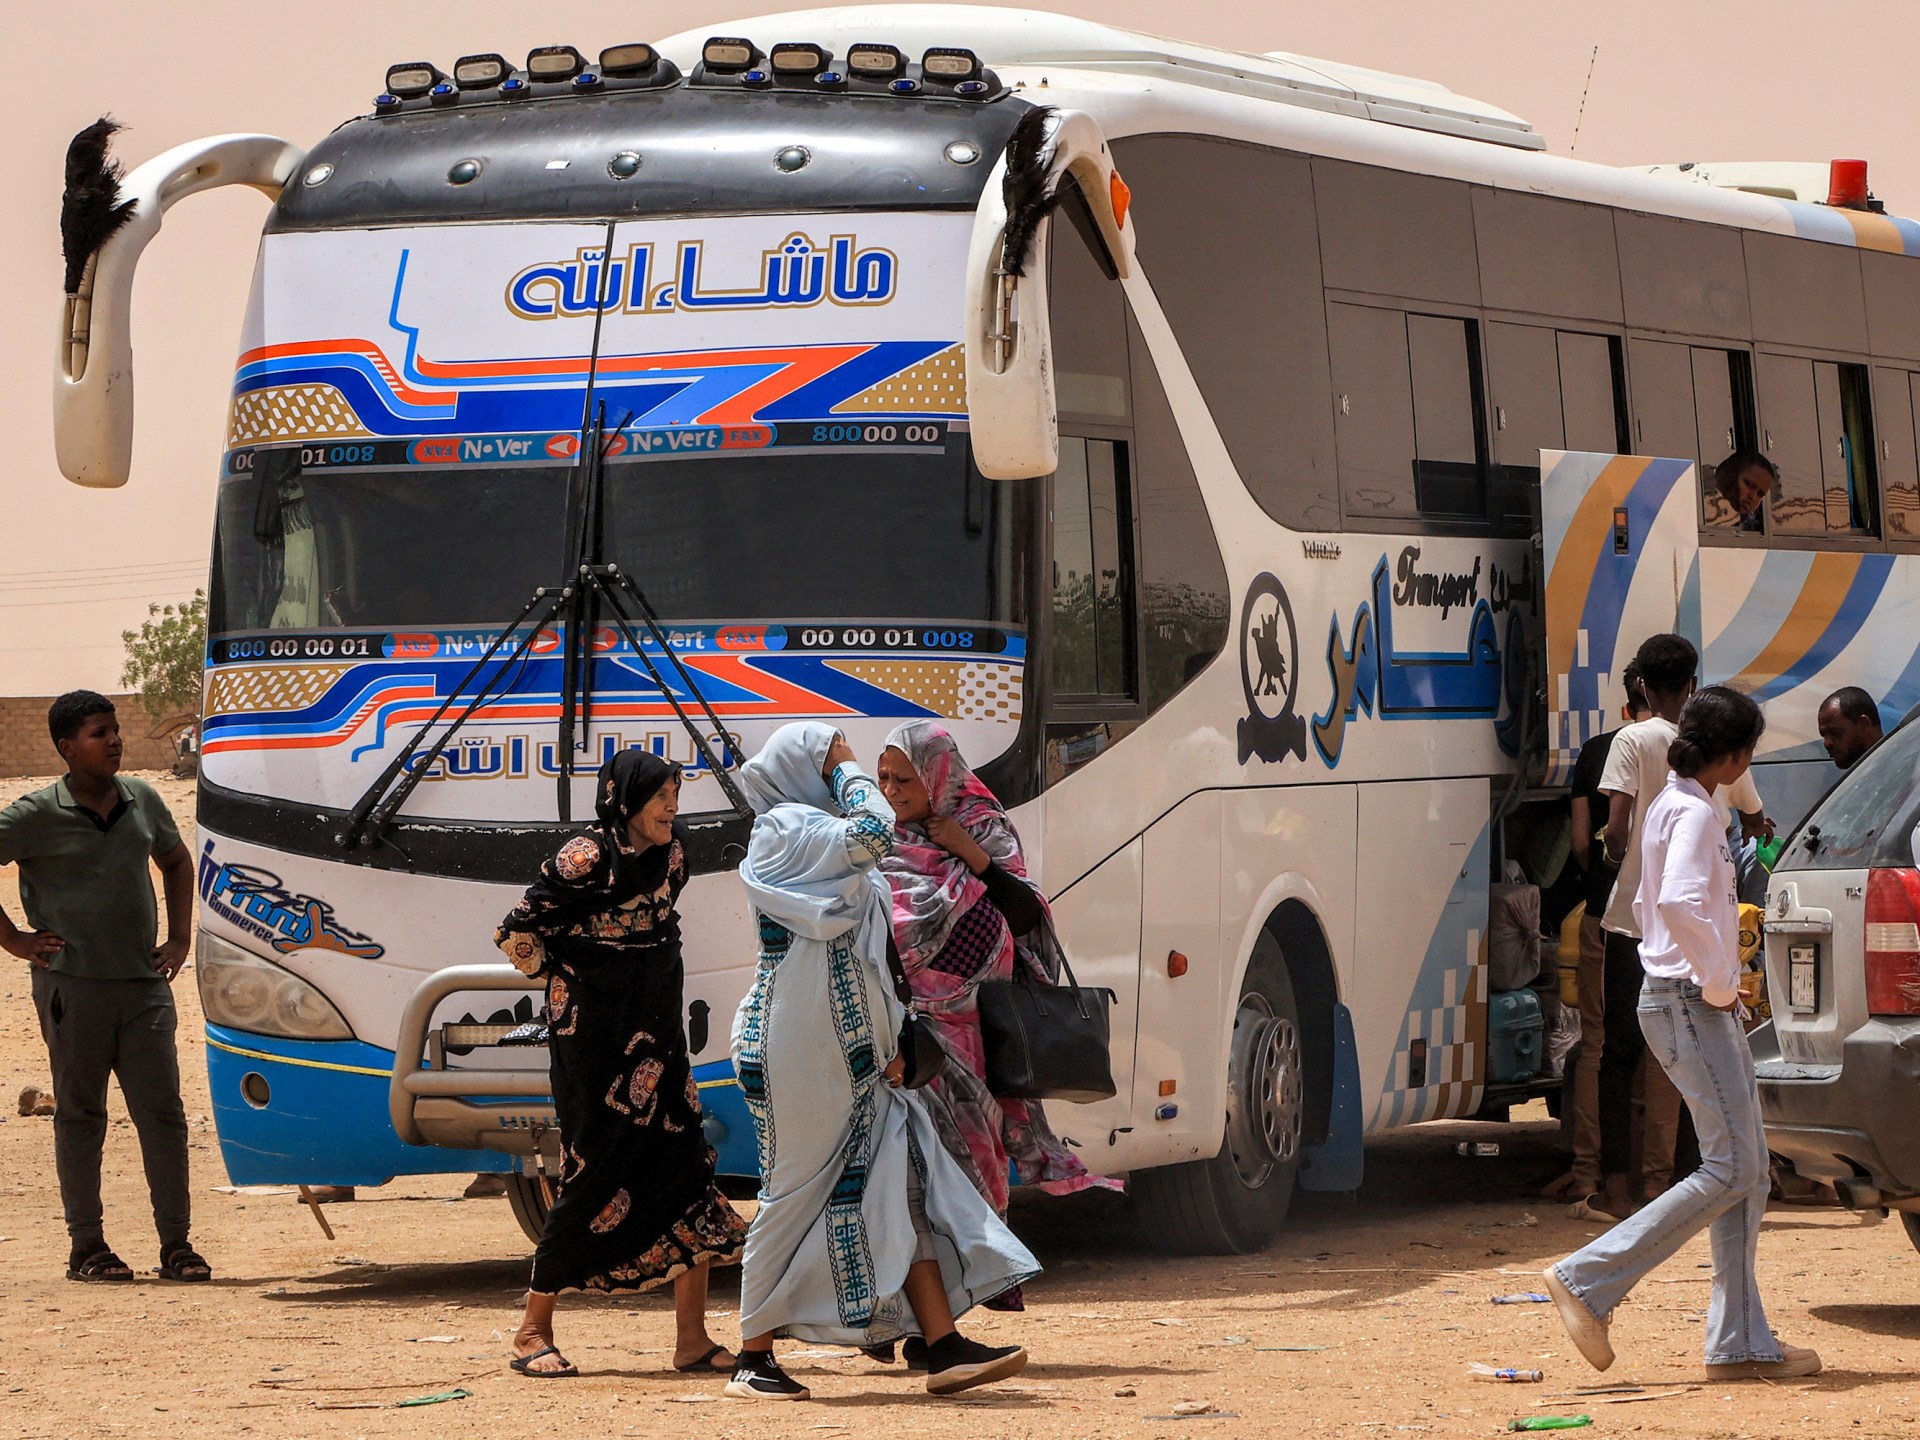 Kelompok bantuan meningkatkan kekhawatiran ketika pertempuran di Sudan melampaui gencatan senjata yang goyah |  Berita Konflik